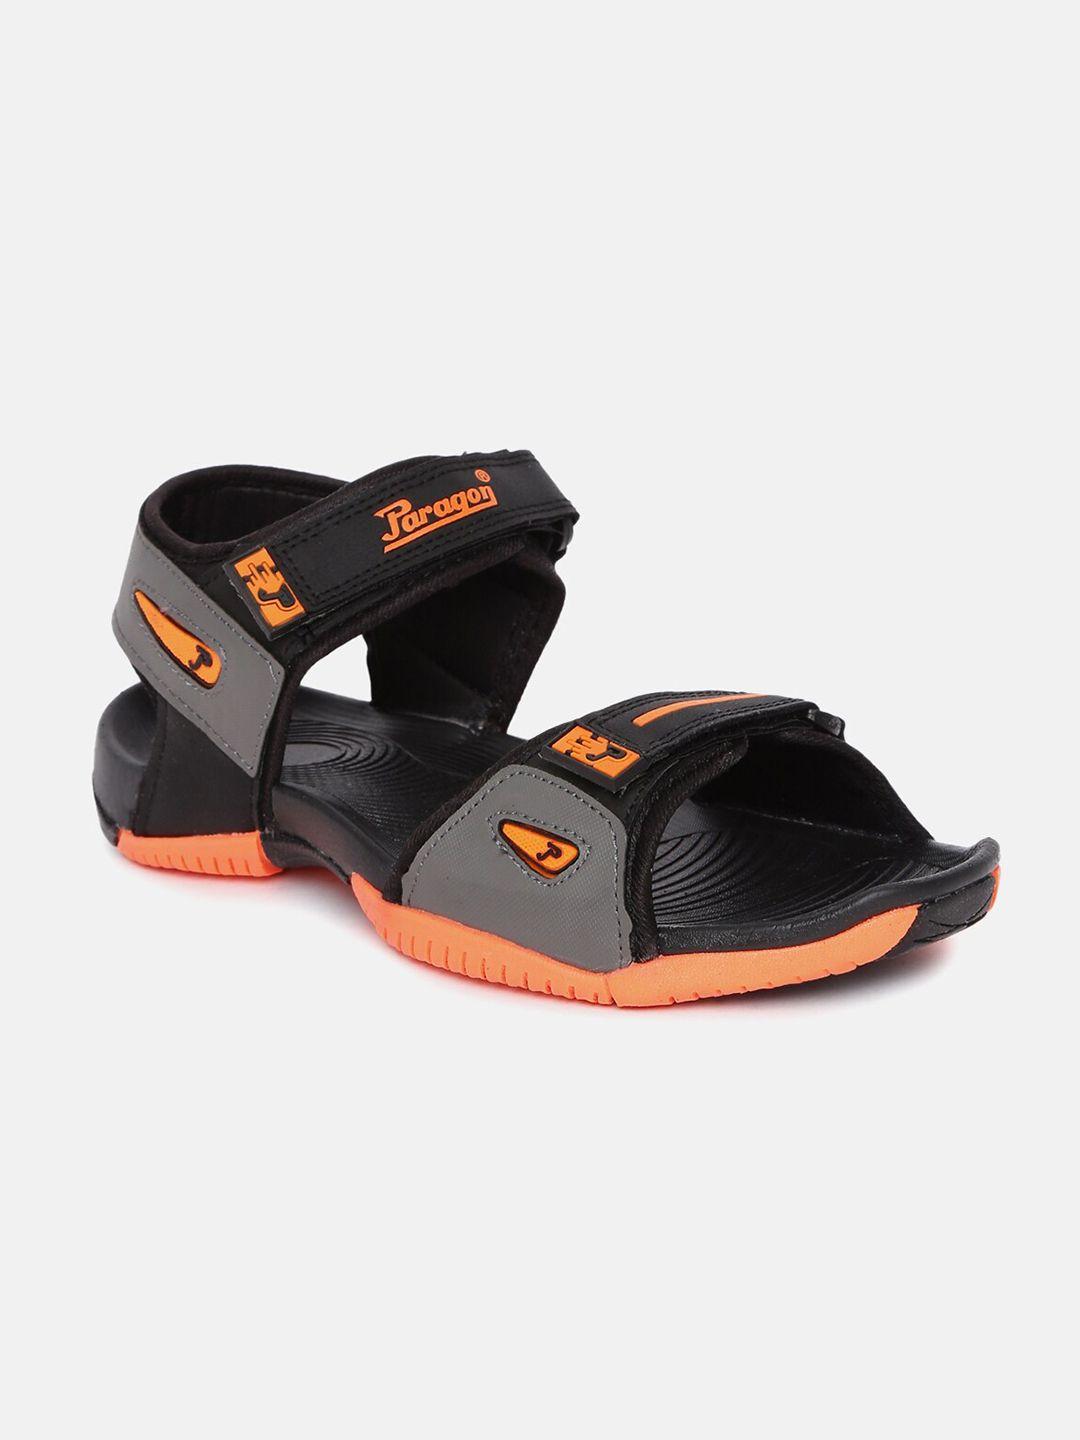 paragon-men-orange-&-black-sports-sandals